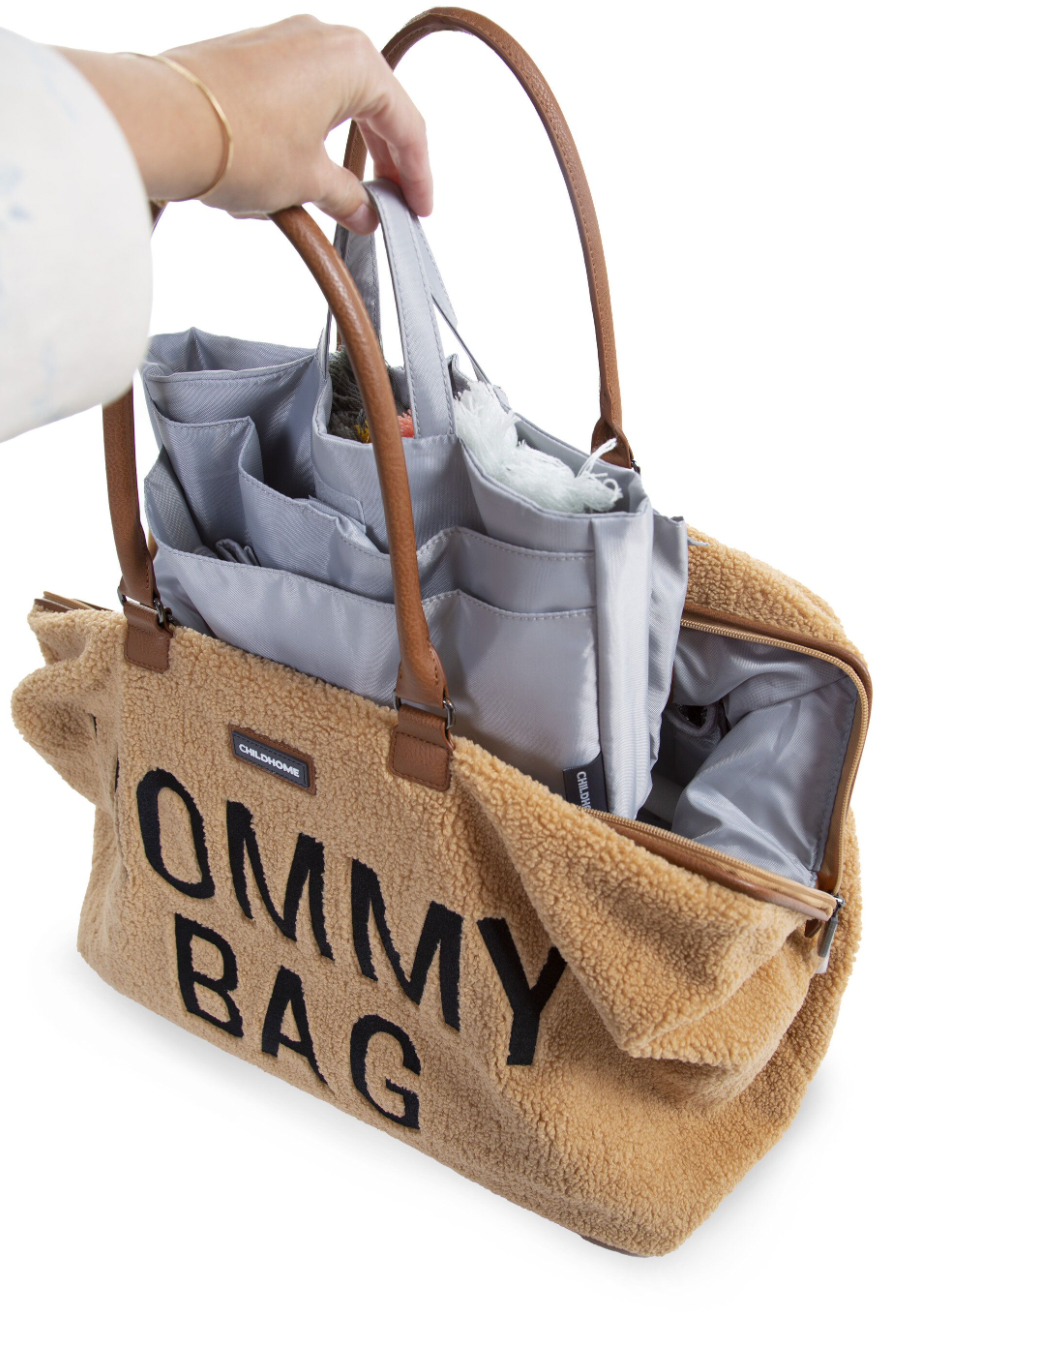 Bag in Bag organiser - Childhome